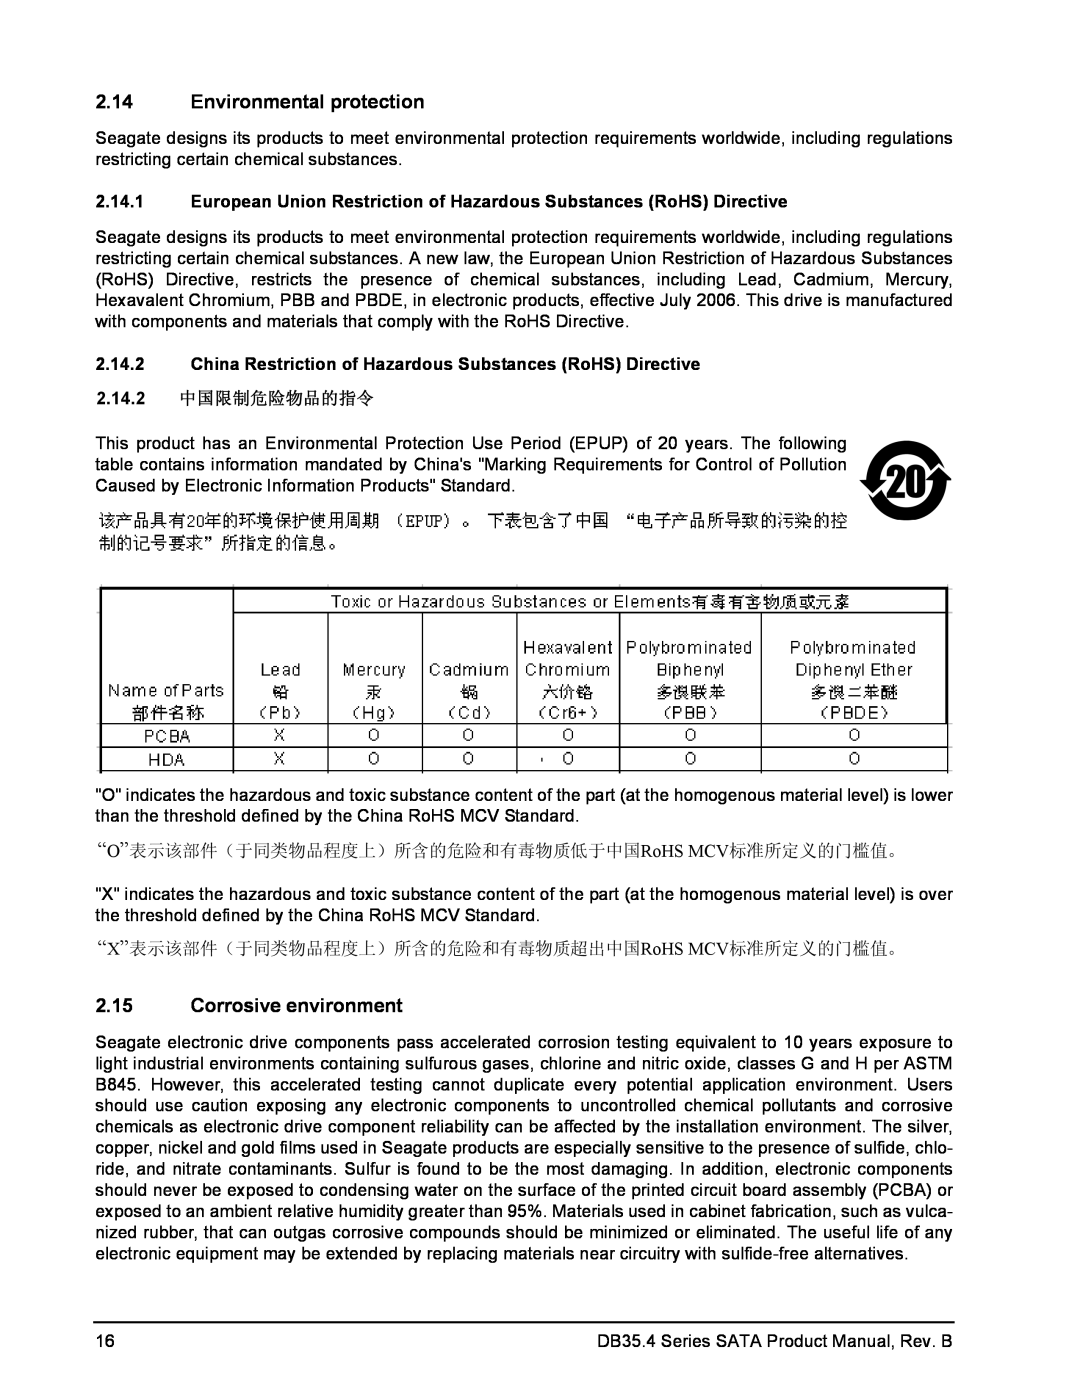 Seagate ST3250310CS manual Environmental protection, Corrosive environment, 2.14.2 中国限制危险物品的指令 